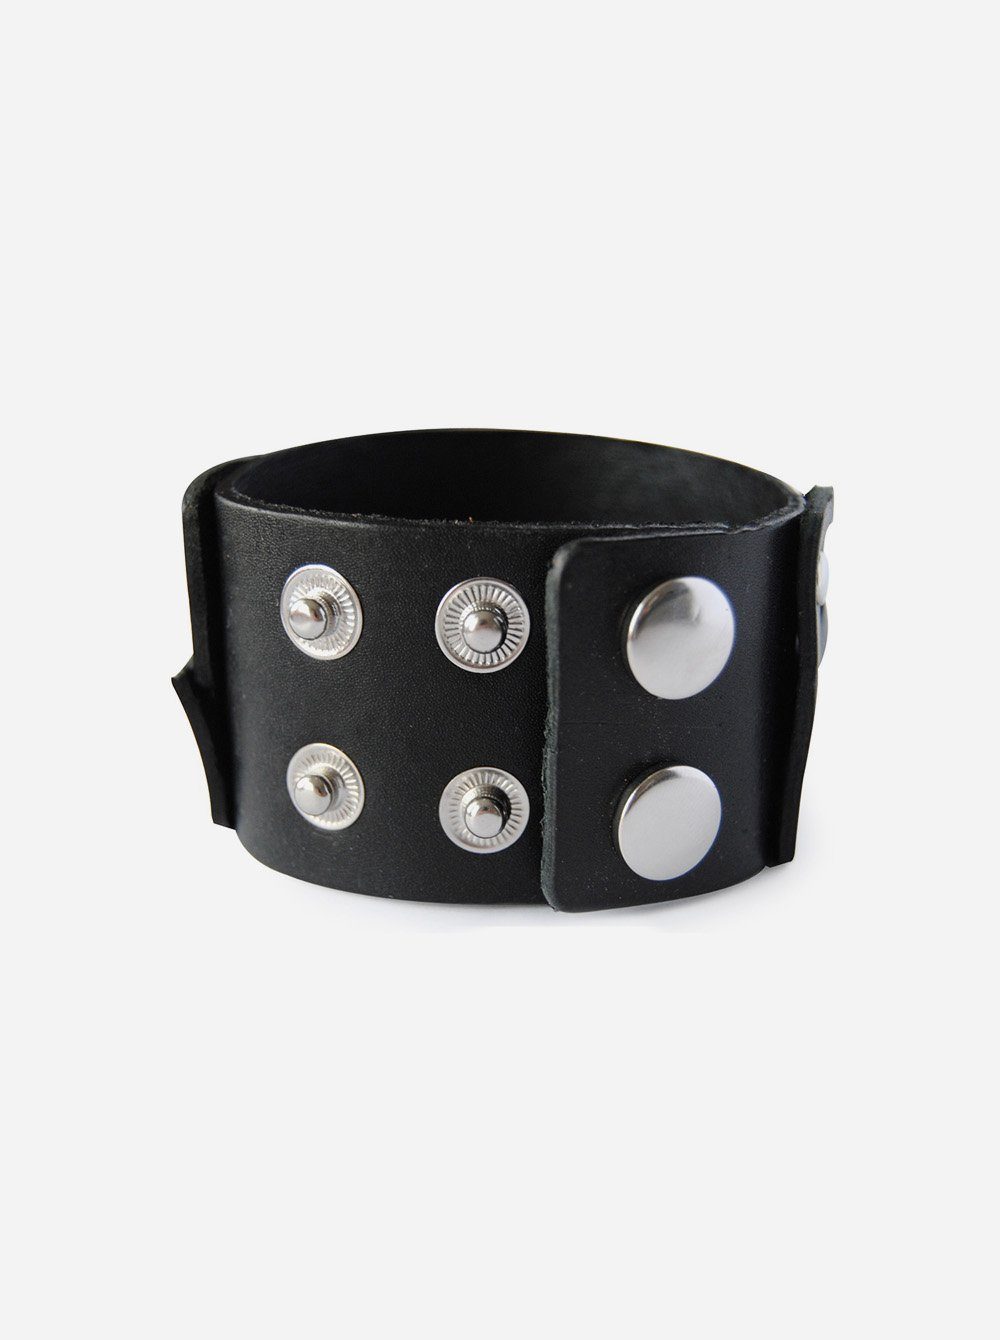 axy Lederarmband Herrenarmband Knopf-Verschluss Längen Leder Schwarz aus 3 in Echtleder, verschließbar Armband, mit Breite